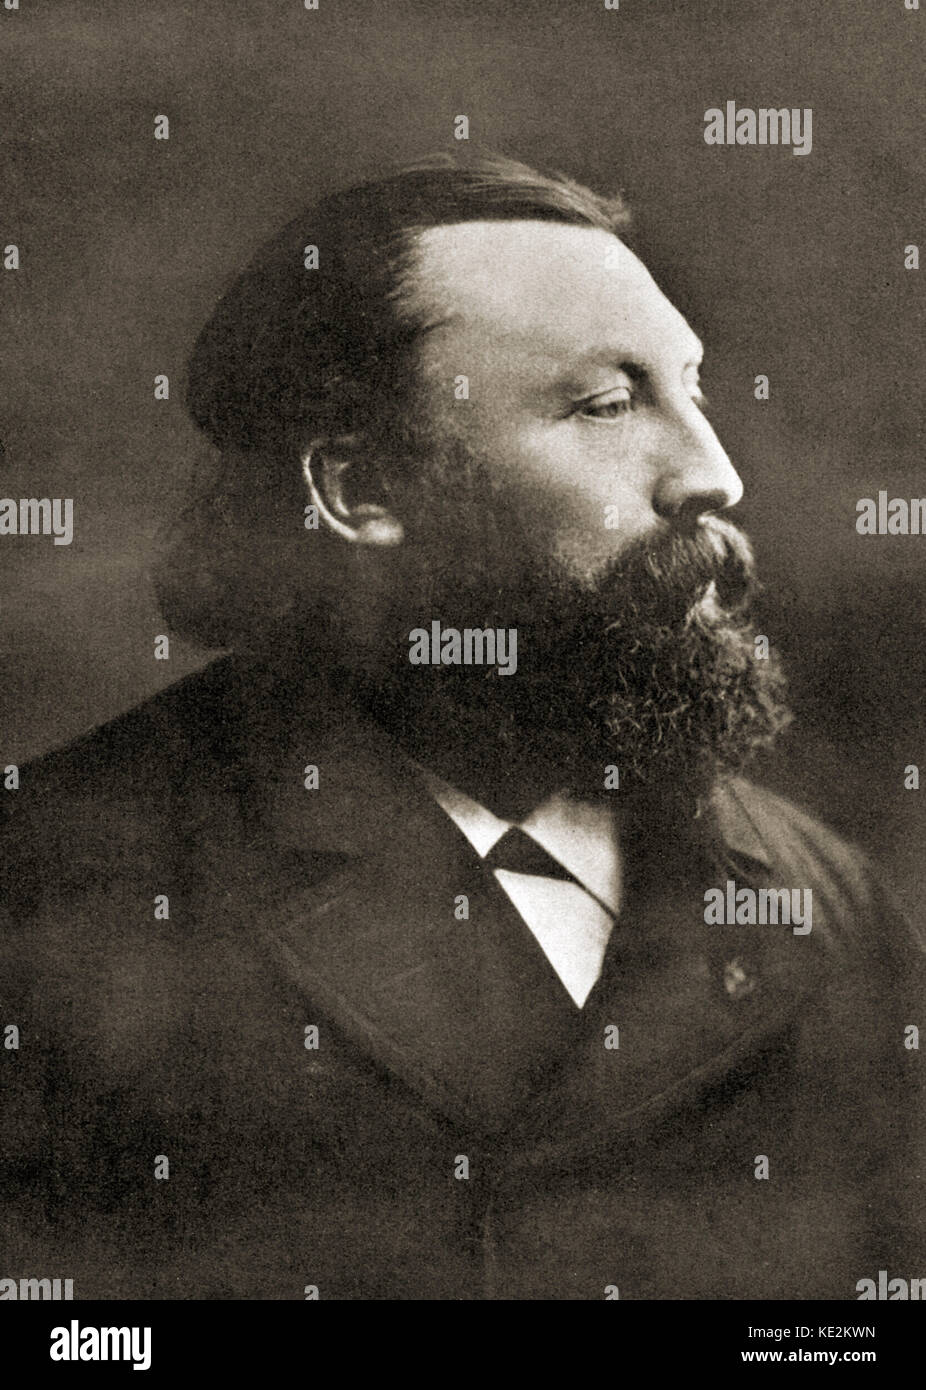 Peter ( Leonard Leopold ) Benoit - retrato del compositor flamenco. PB: 17 de agosto de 1834 - 8 de marzo de 1901. Foto de stock